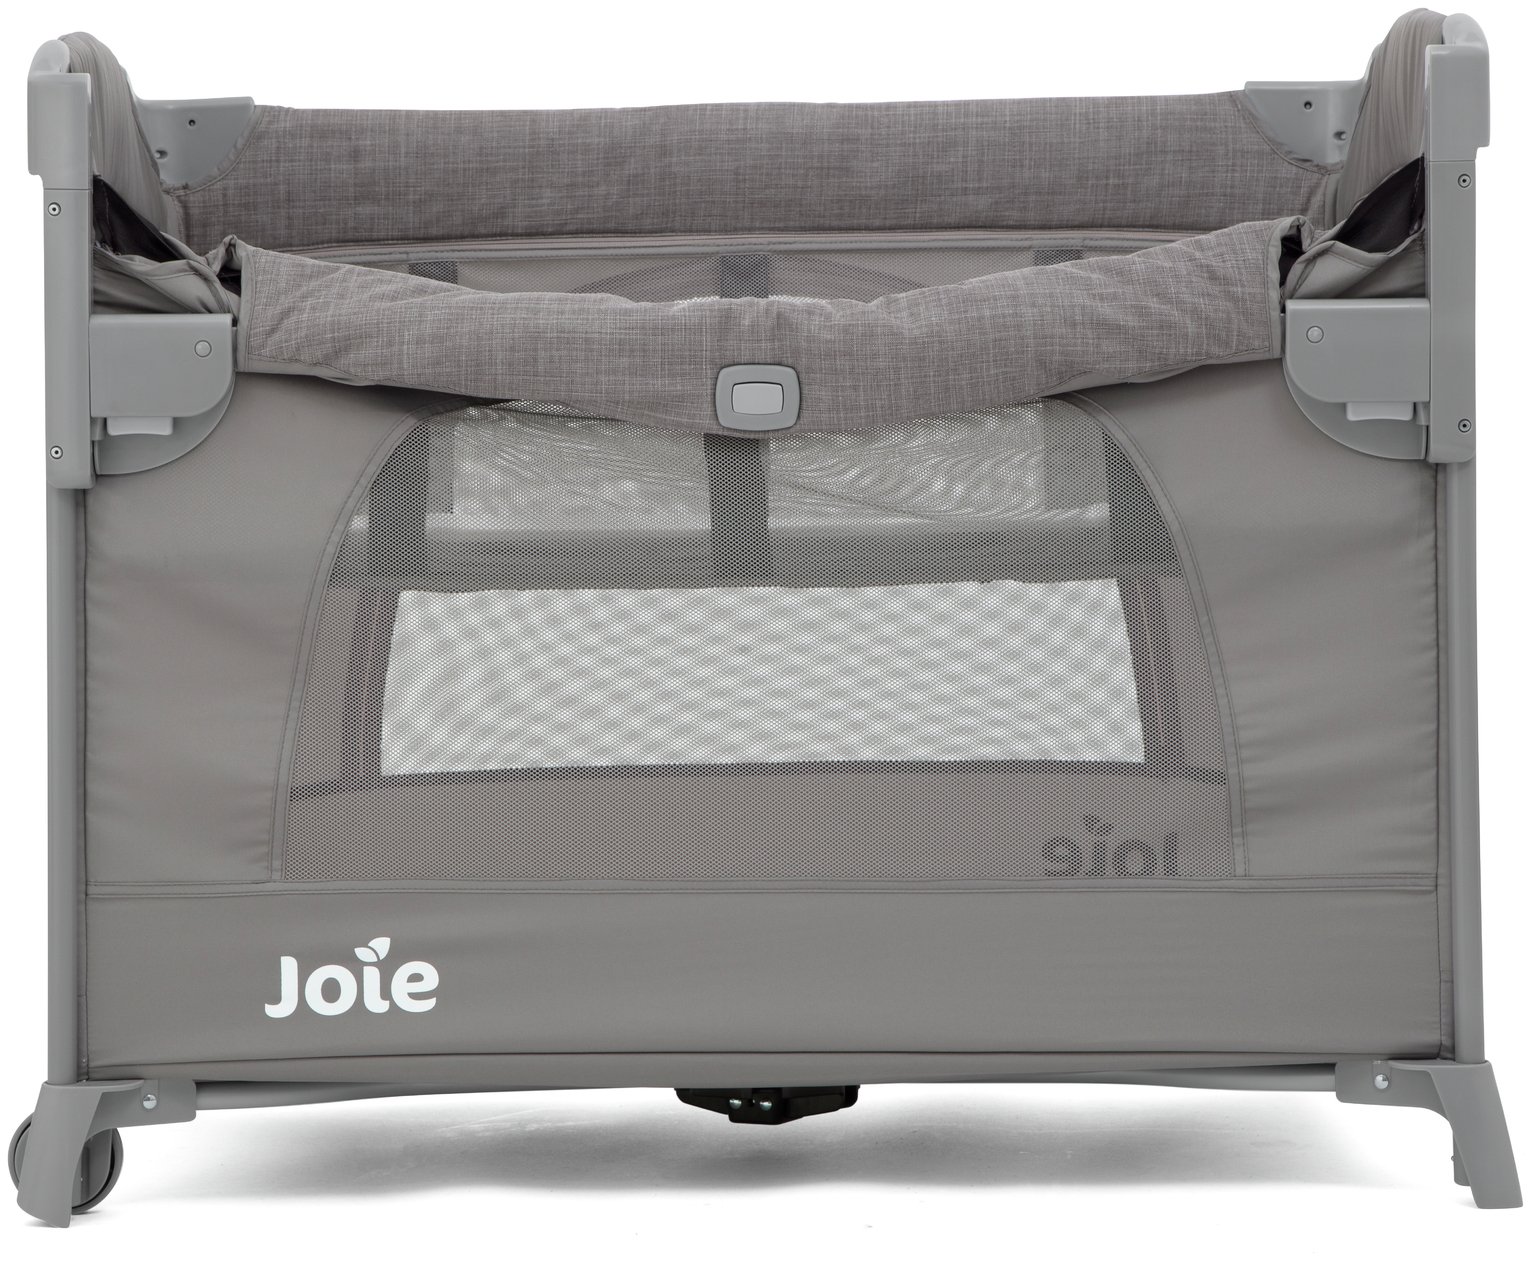 joie compact travel cot mattress